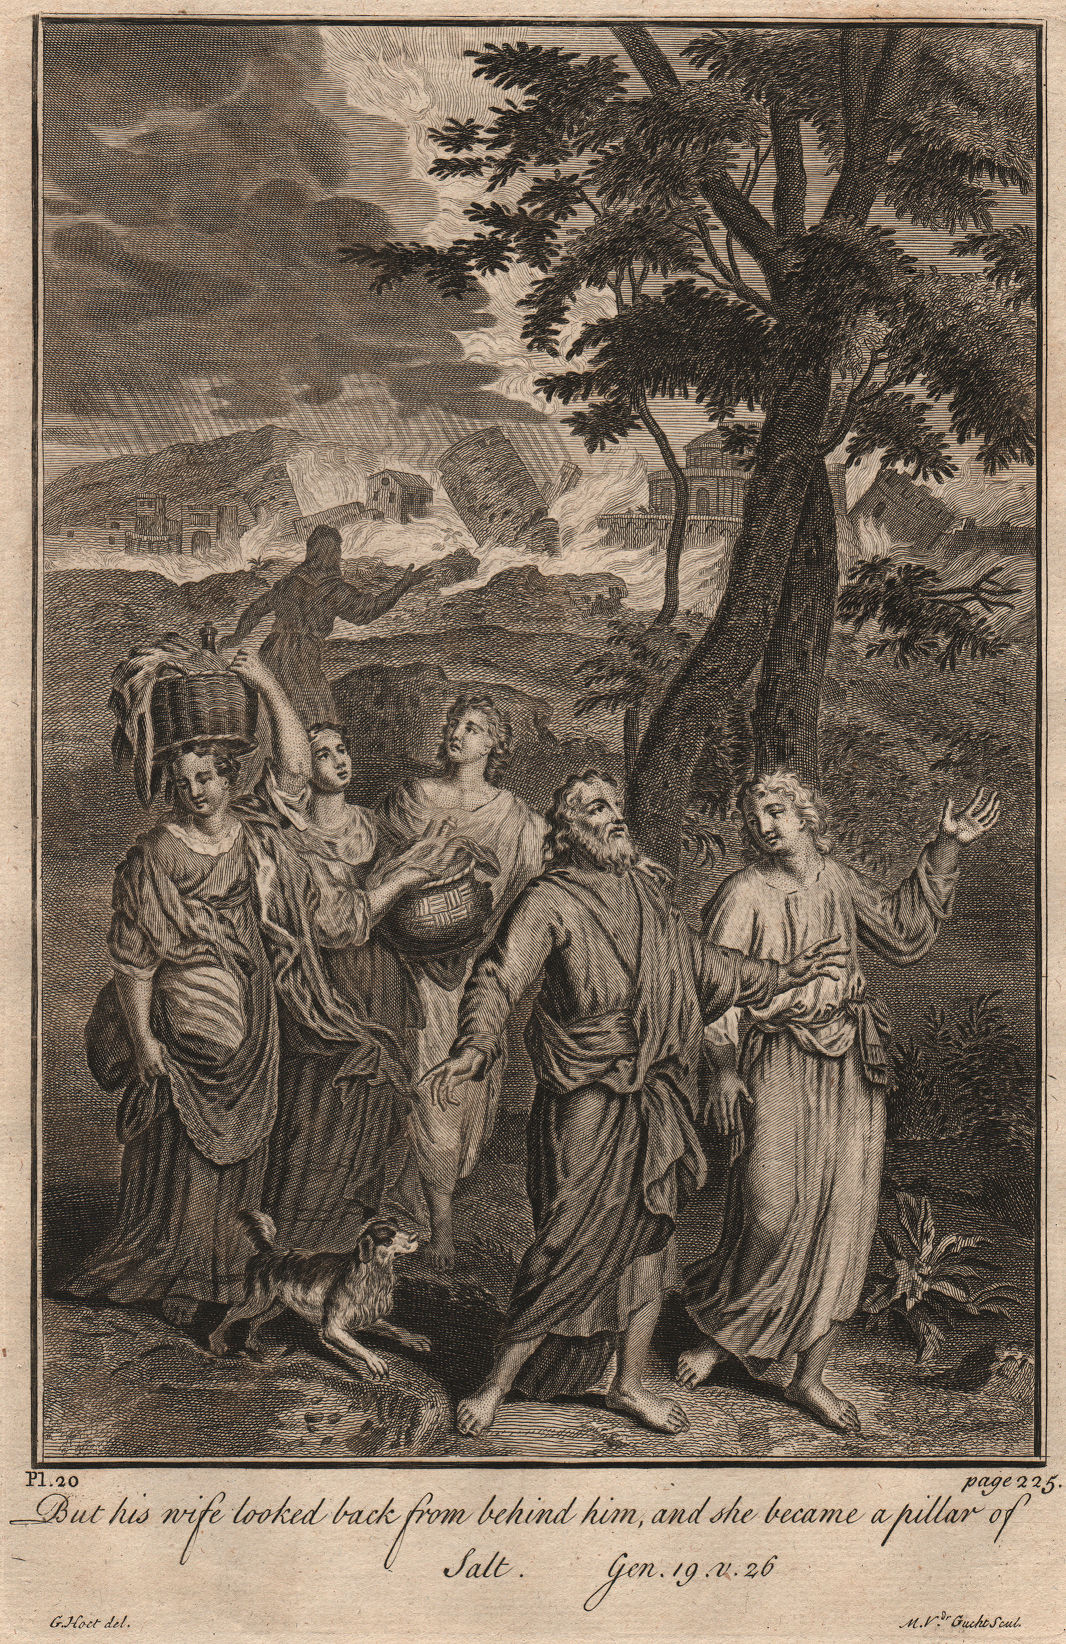 Associate Product BIBLE. Genesis 19.26 She became a pillar of salt 1752 old antique print